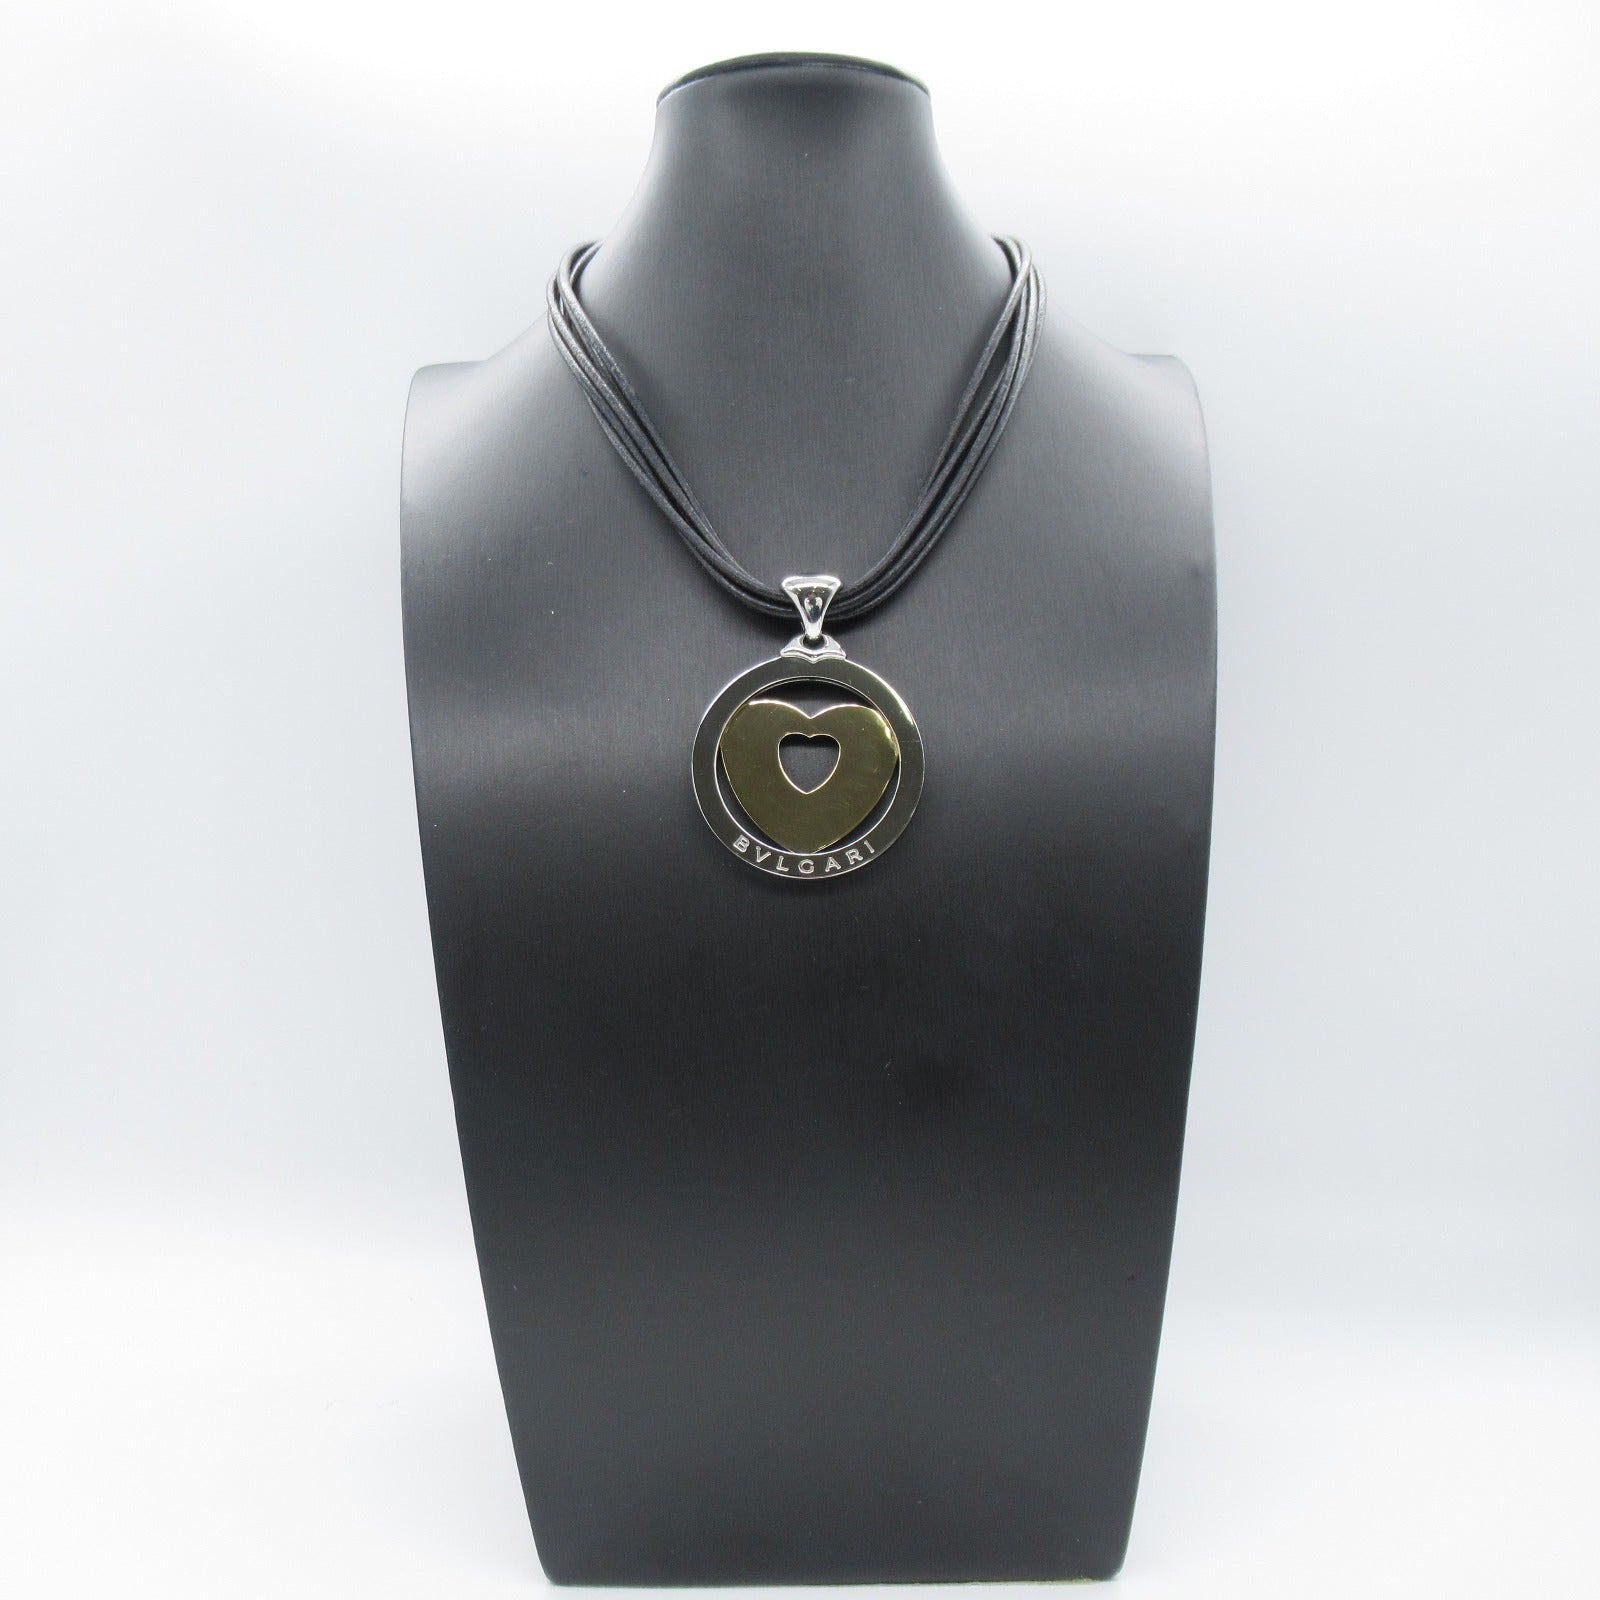 Bulgari BVLGARI Tonheart  necklace necklace jewelry K18 (yellow g) stainless steel men ladies gold / silver collar